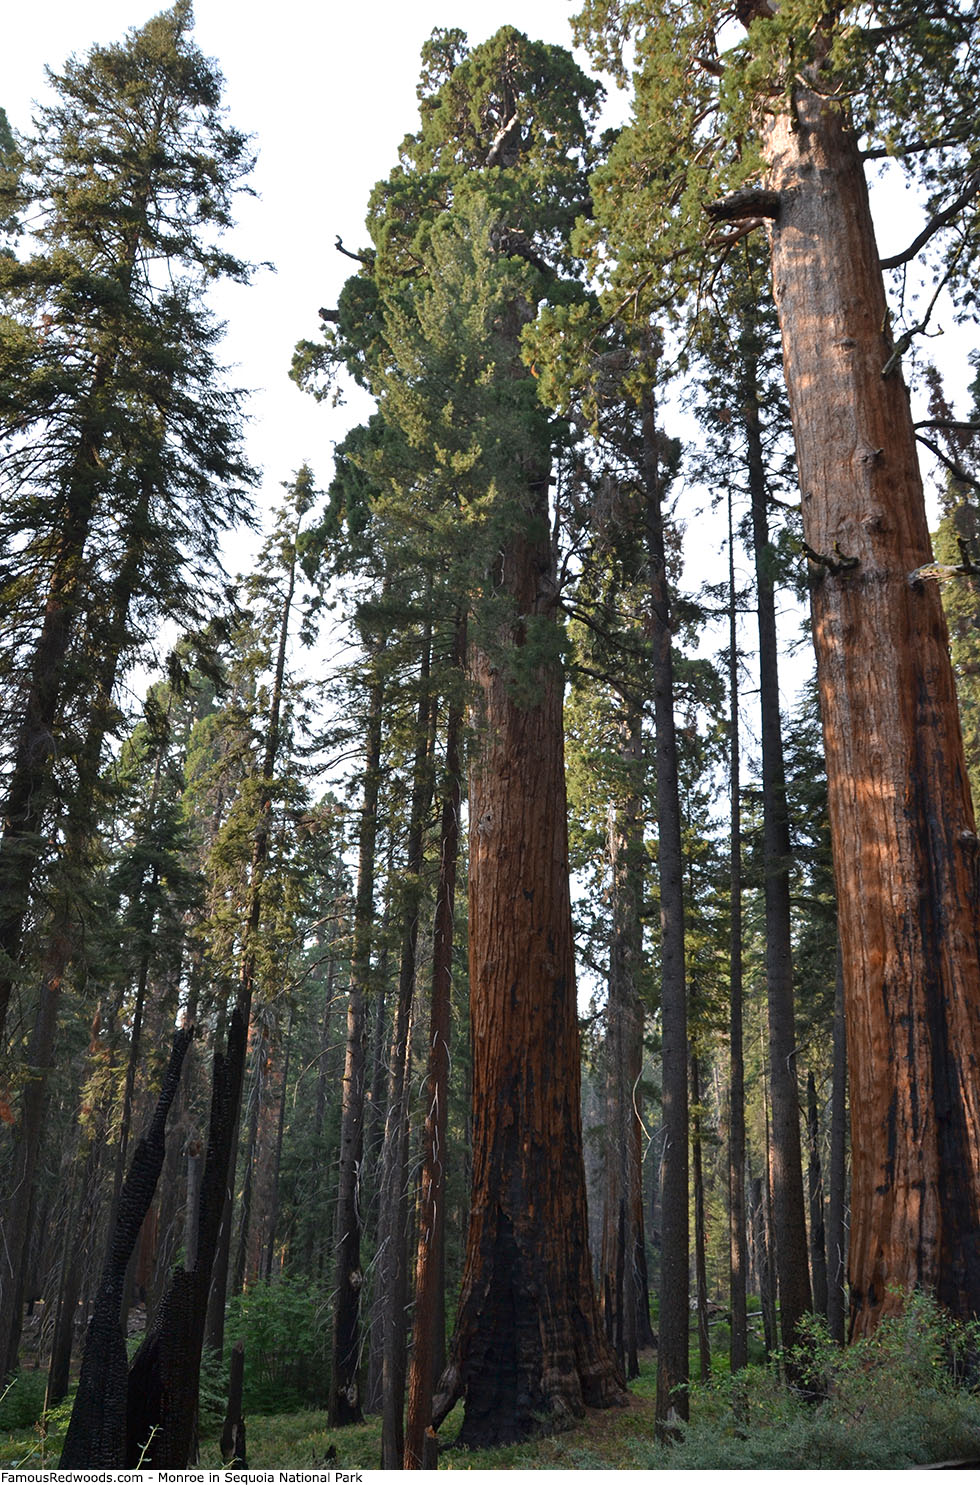 Sequoia National Park - Monroe Tree